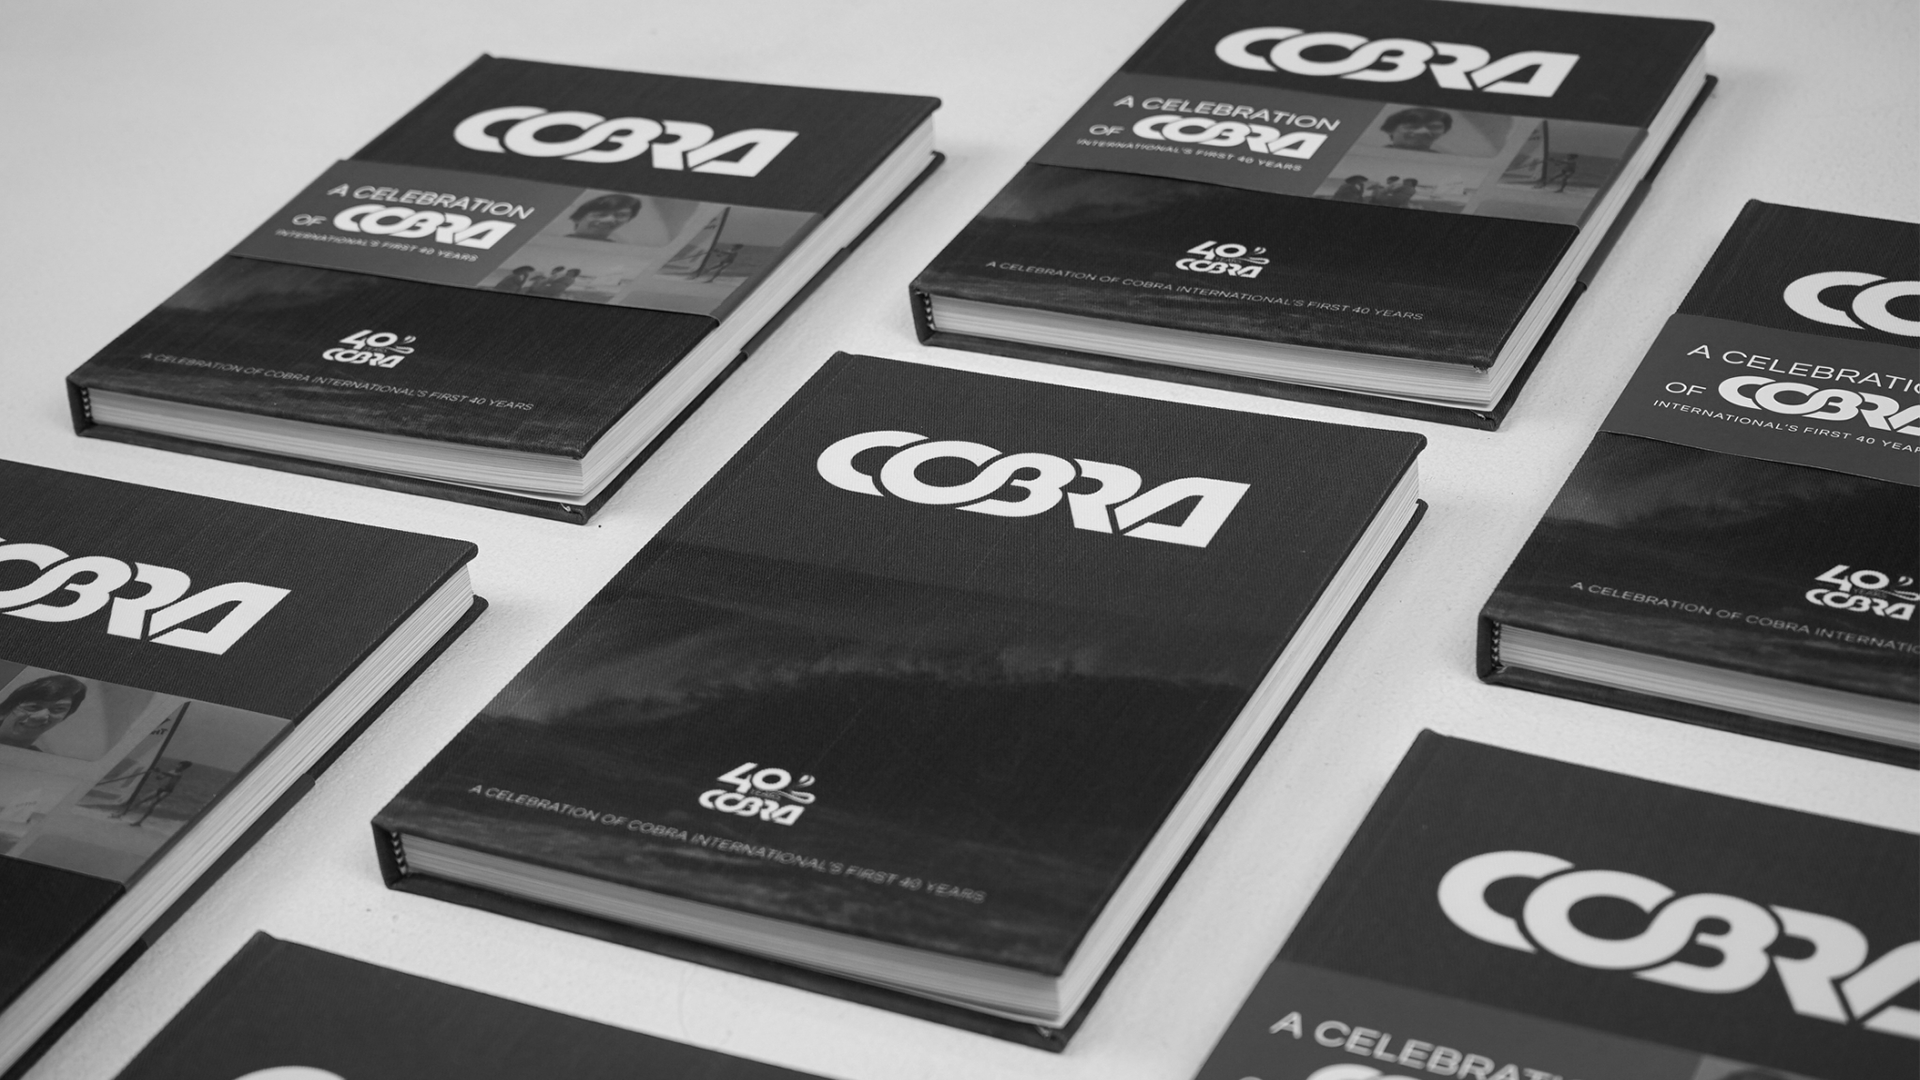 40 Year Anniversary Book for COBRA